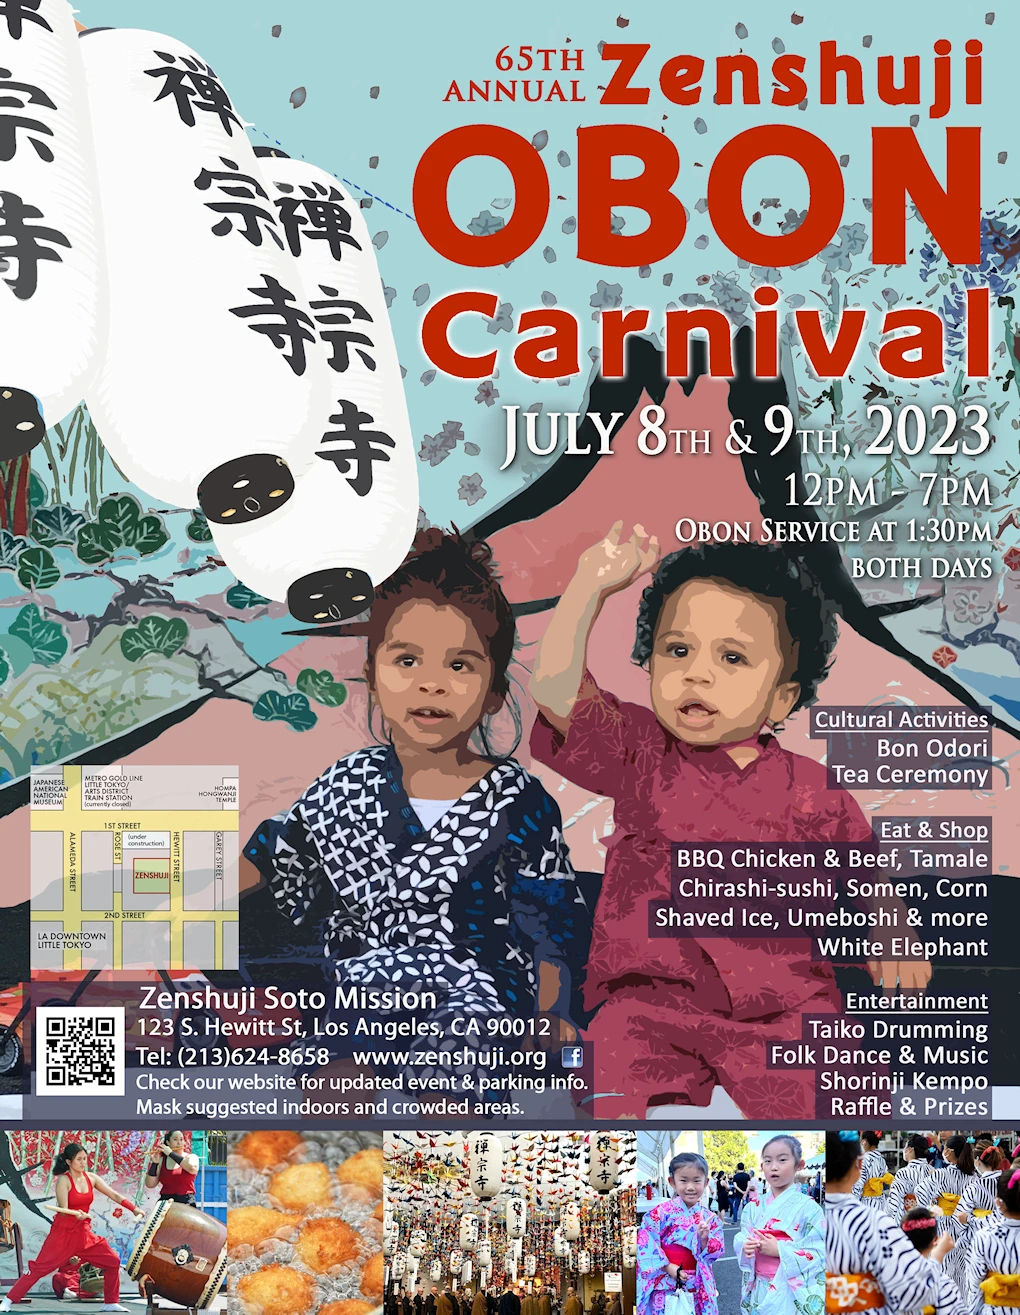 2023 Zenshuji Soto Mission Annual Summer Obon Matsuri Festival Event, Japantown Los Angeles (Japanese Food, Taiko, Performances, Games..) (2 Days) [